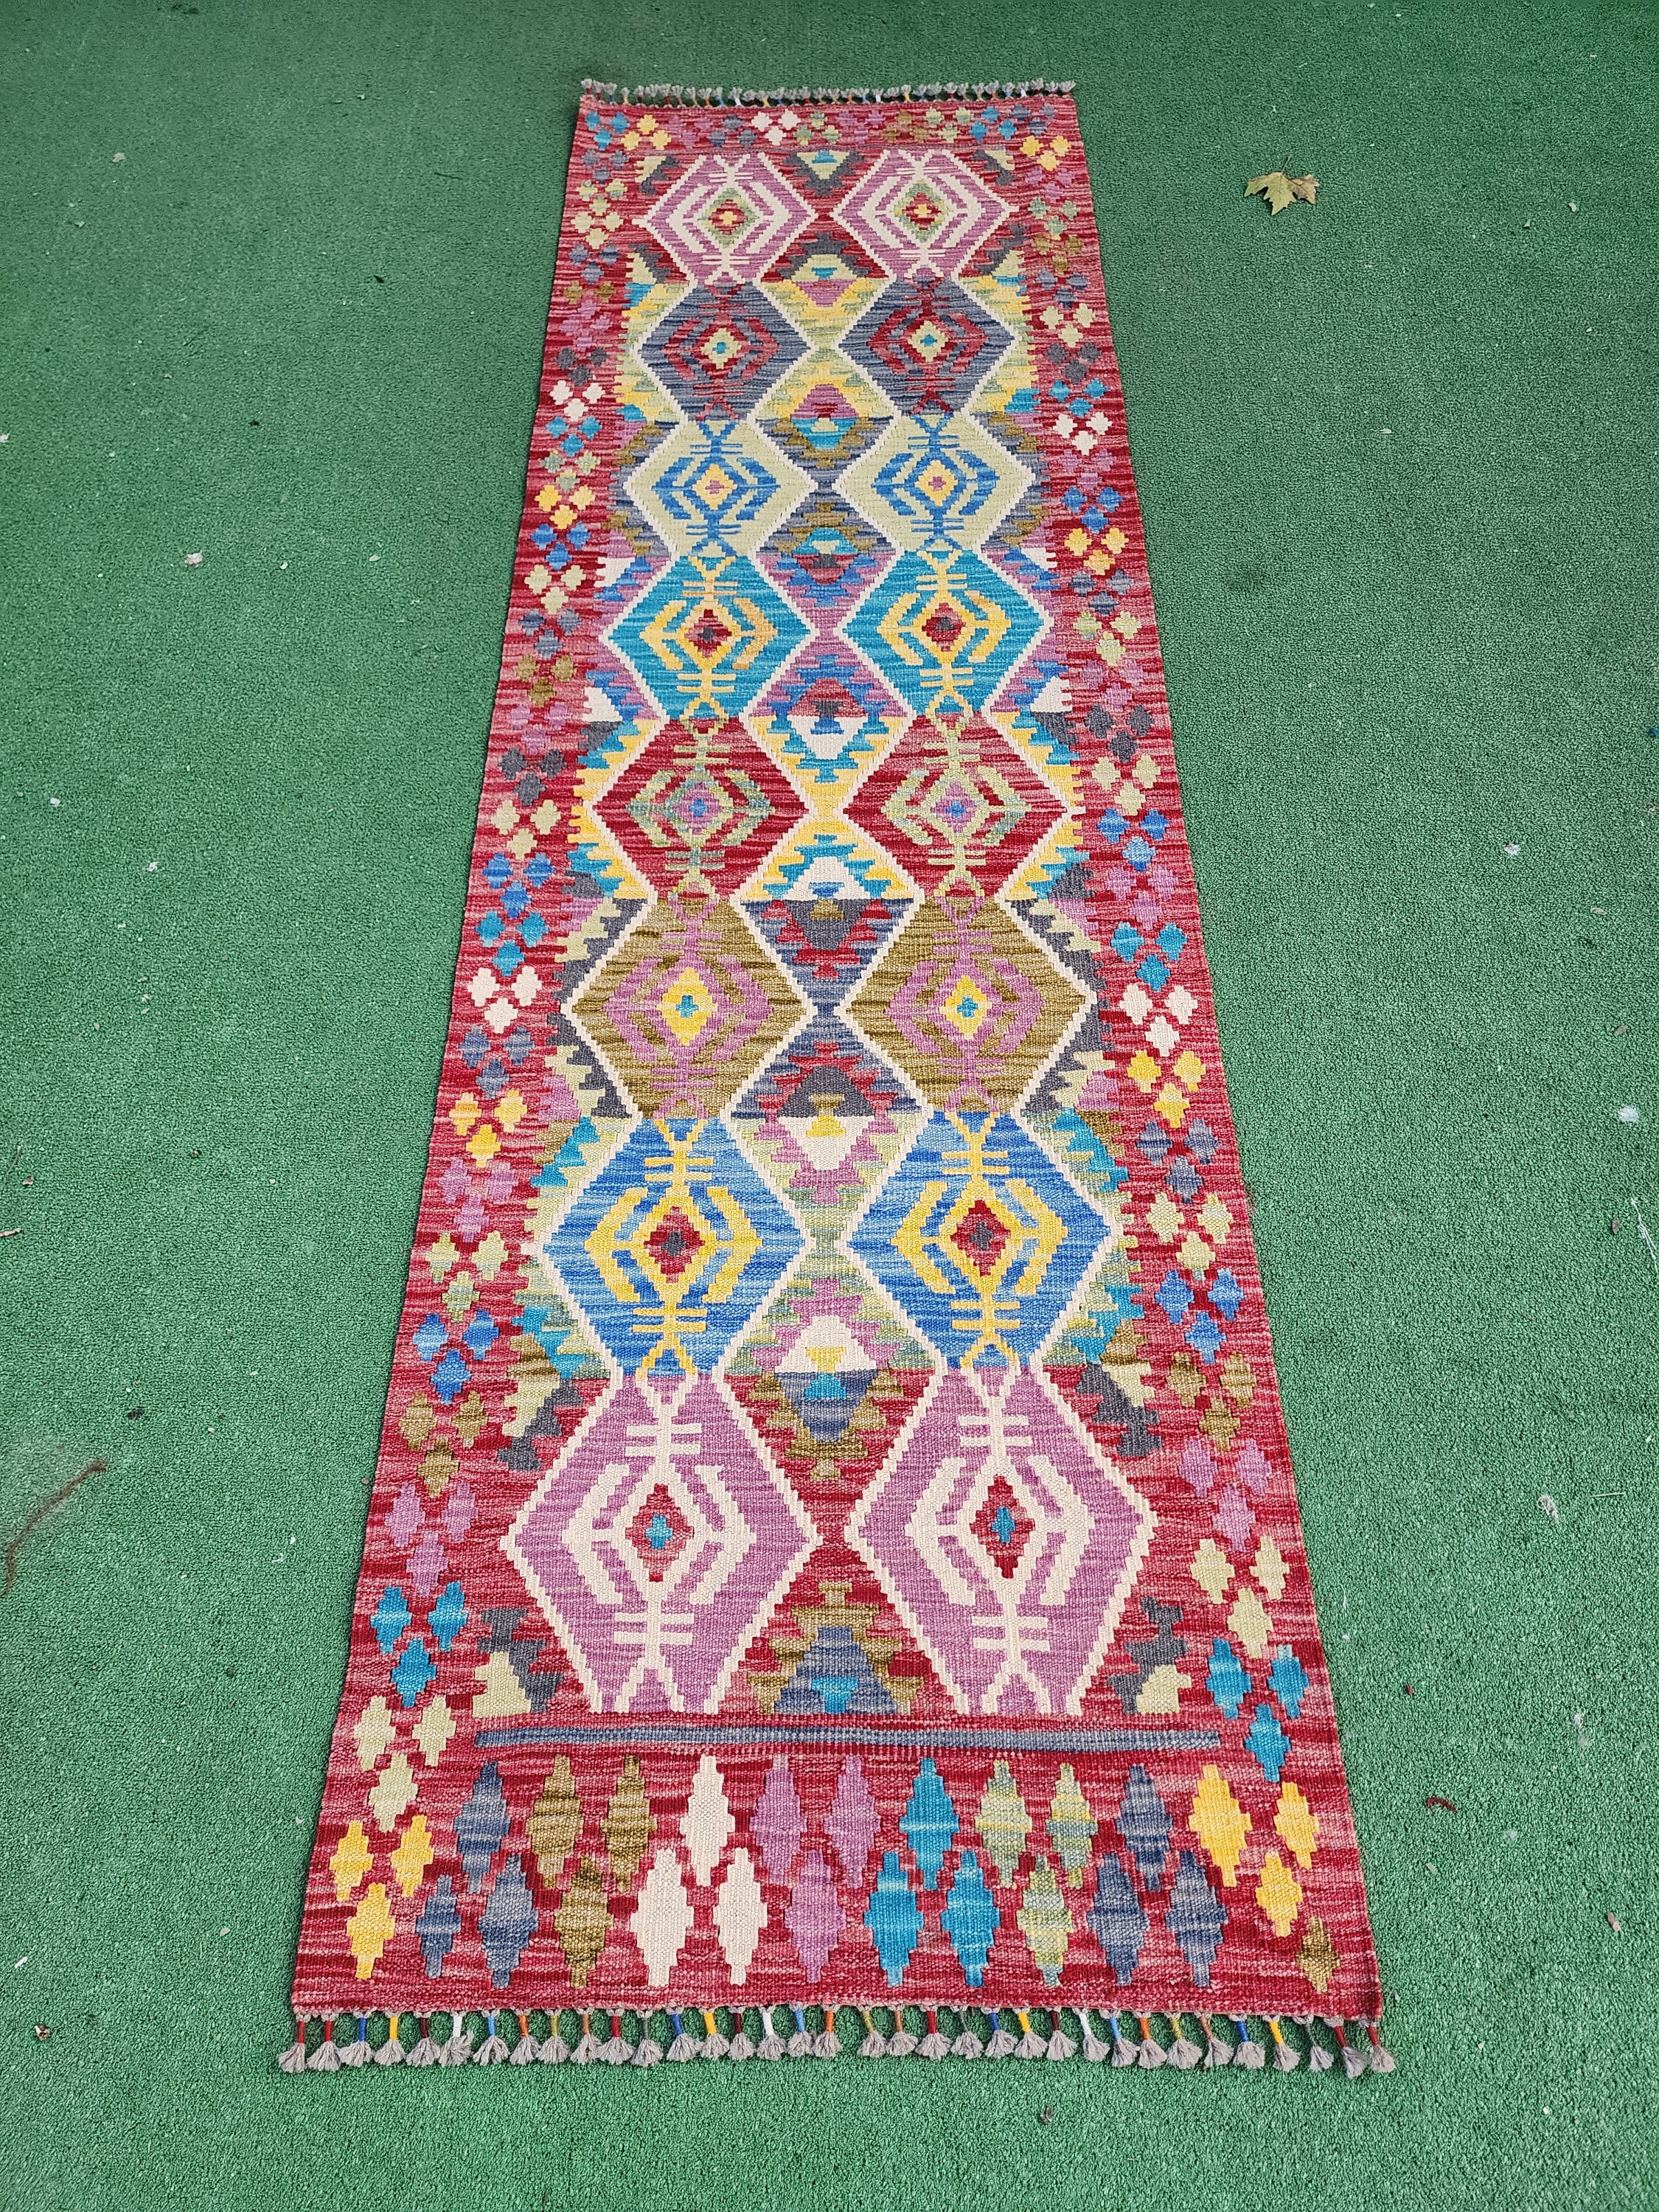 Afghan Kilim Vintage Rug, 8 ft x 2 ft  Rust Red Blue and Off White Turkish Hallway Runner